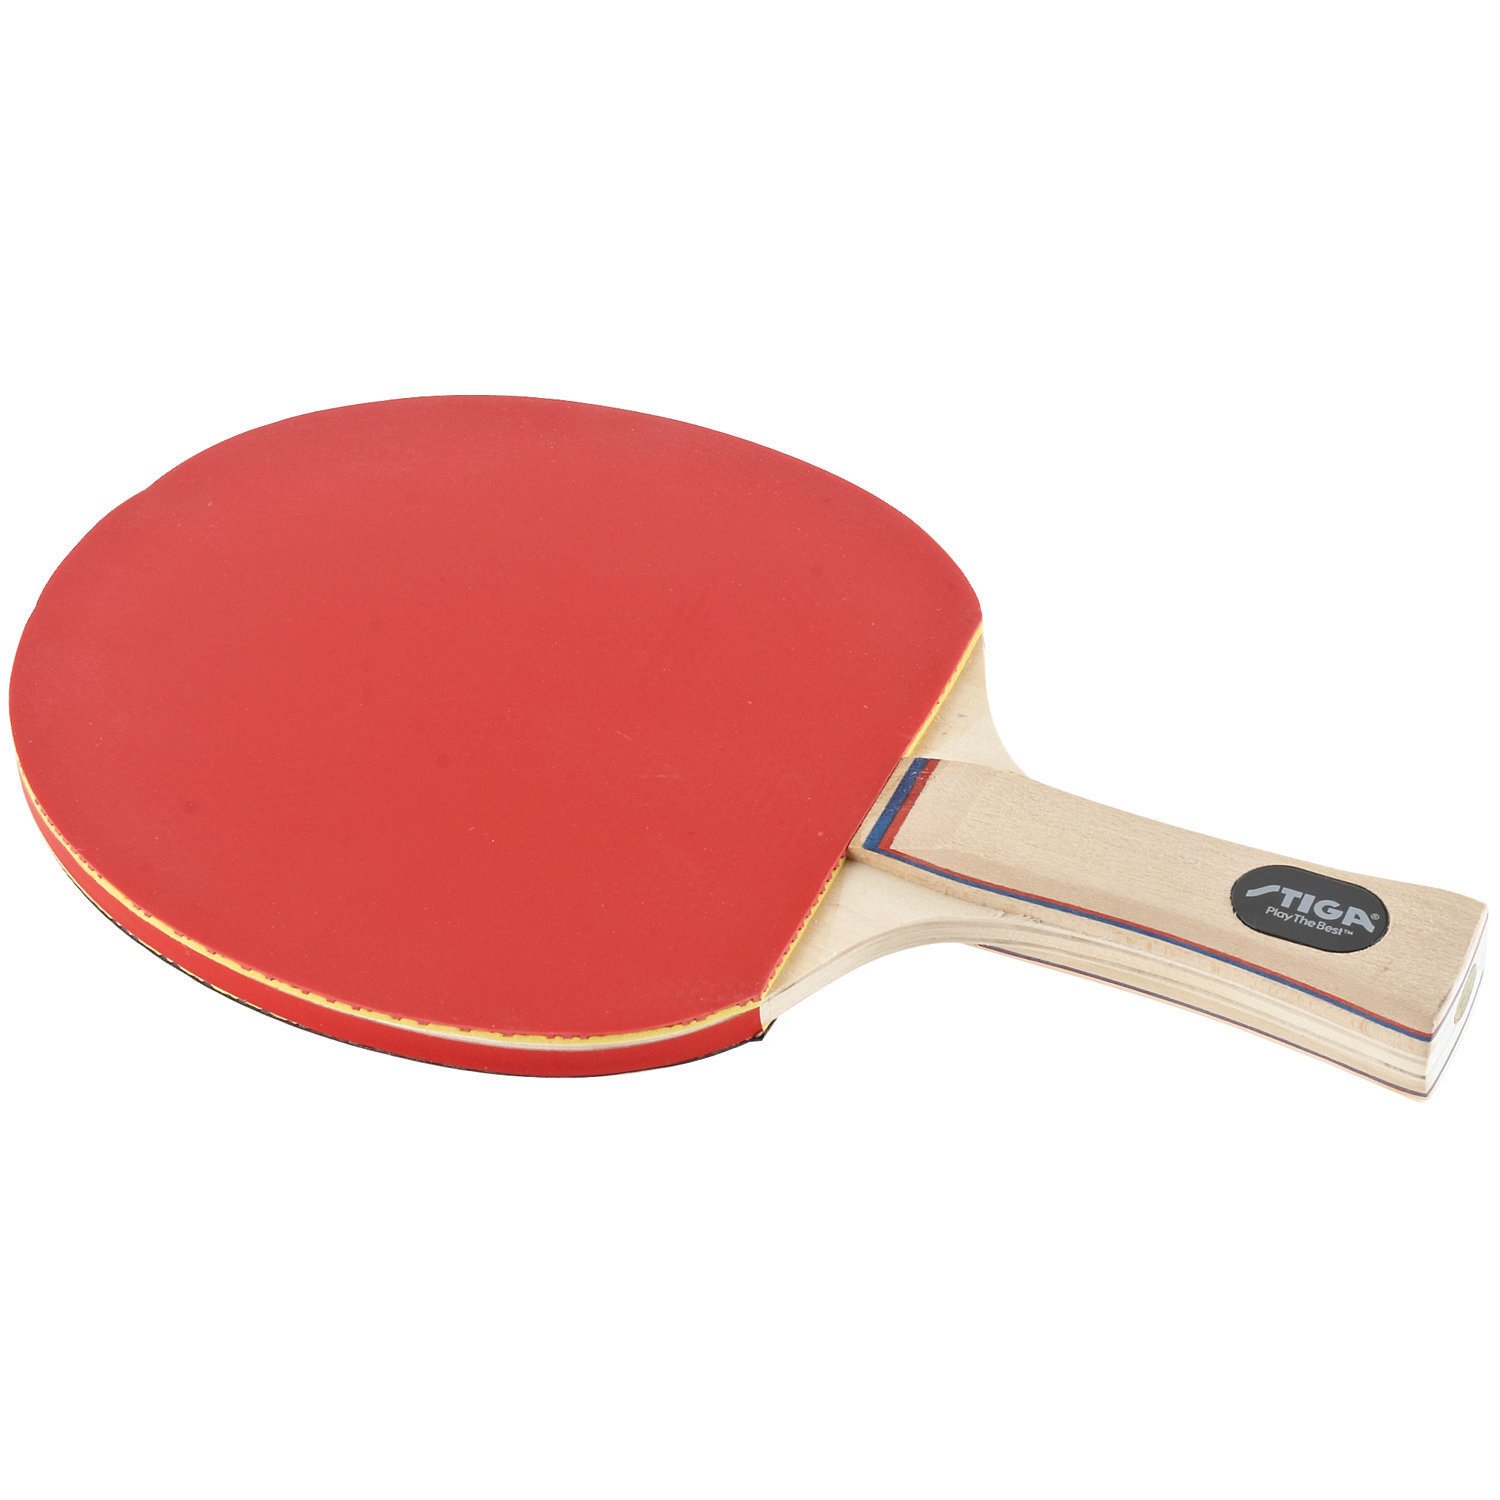 racket table tennis